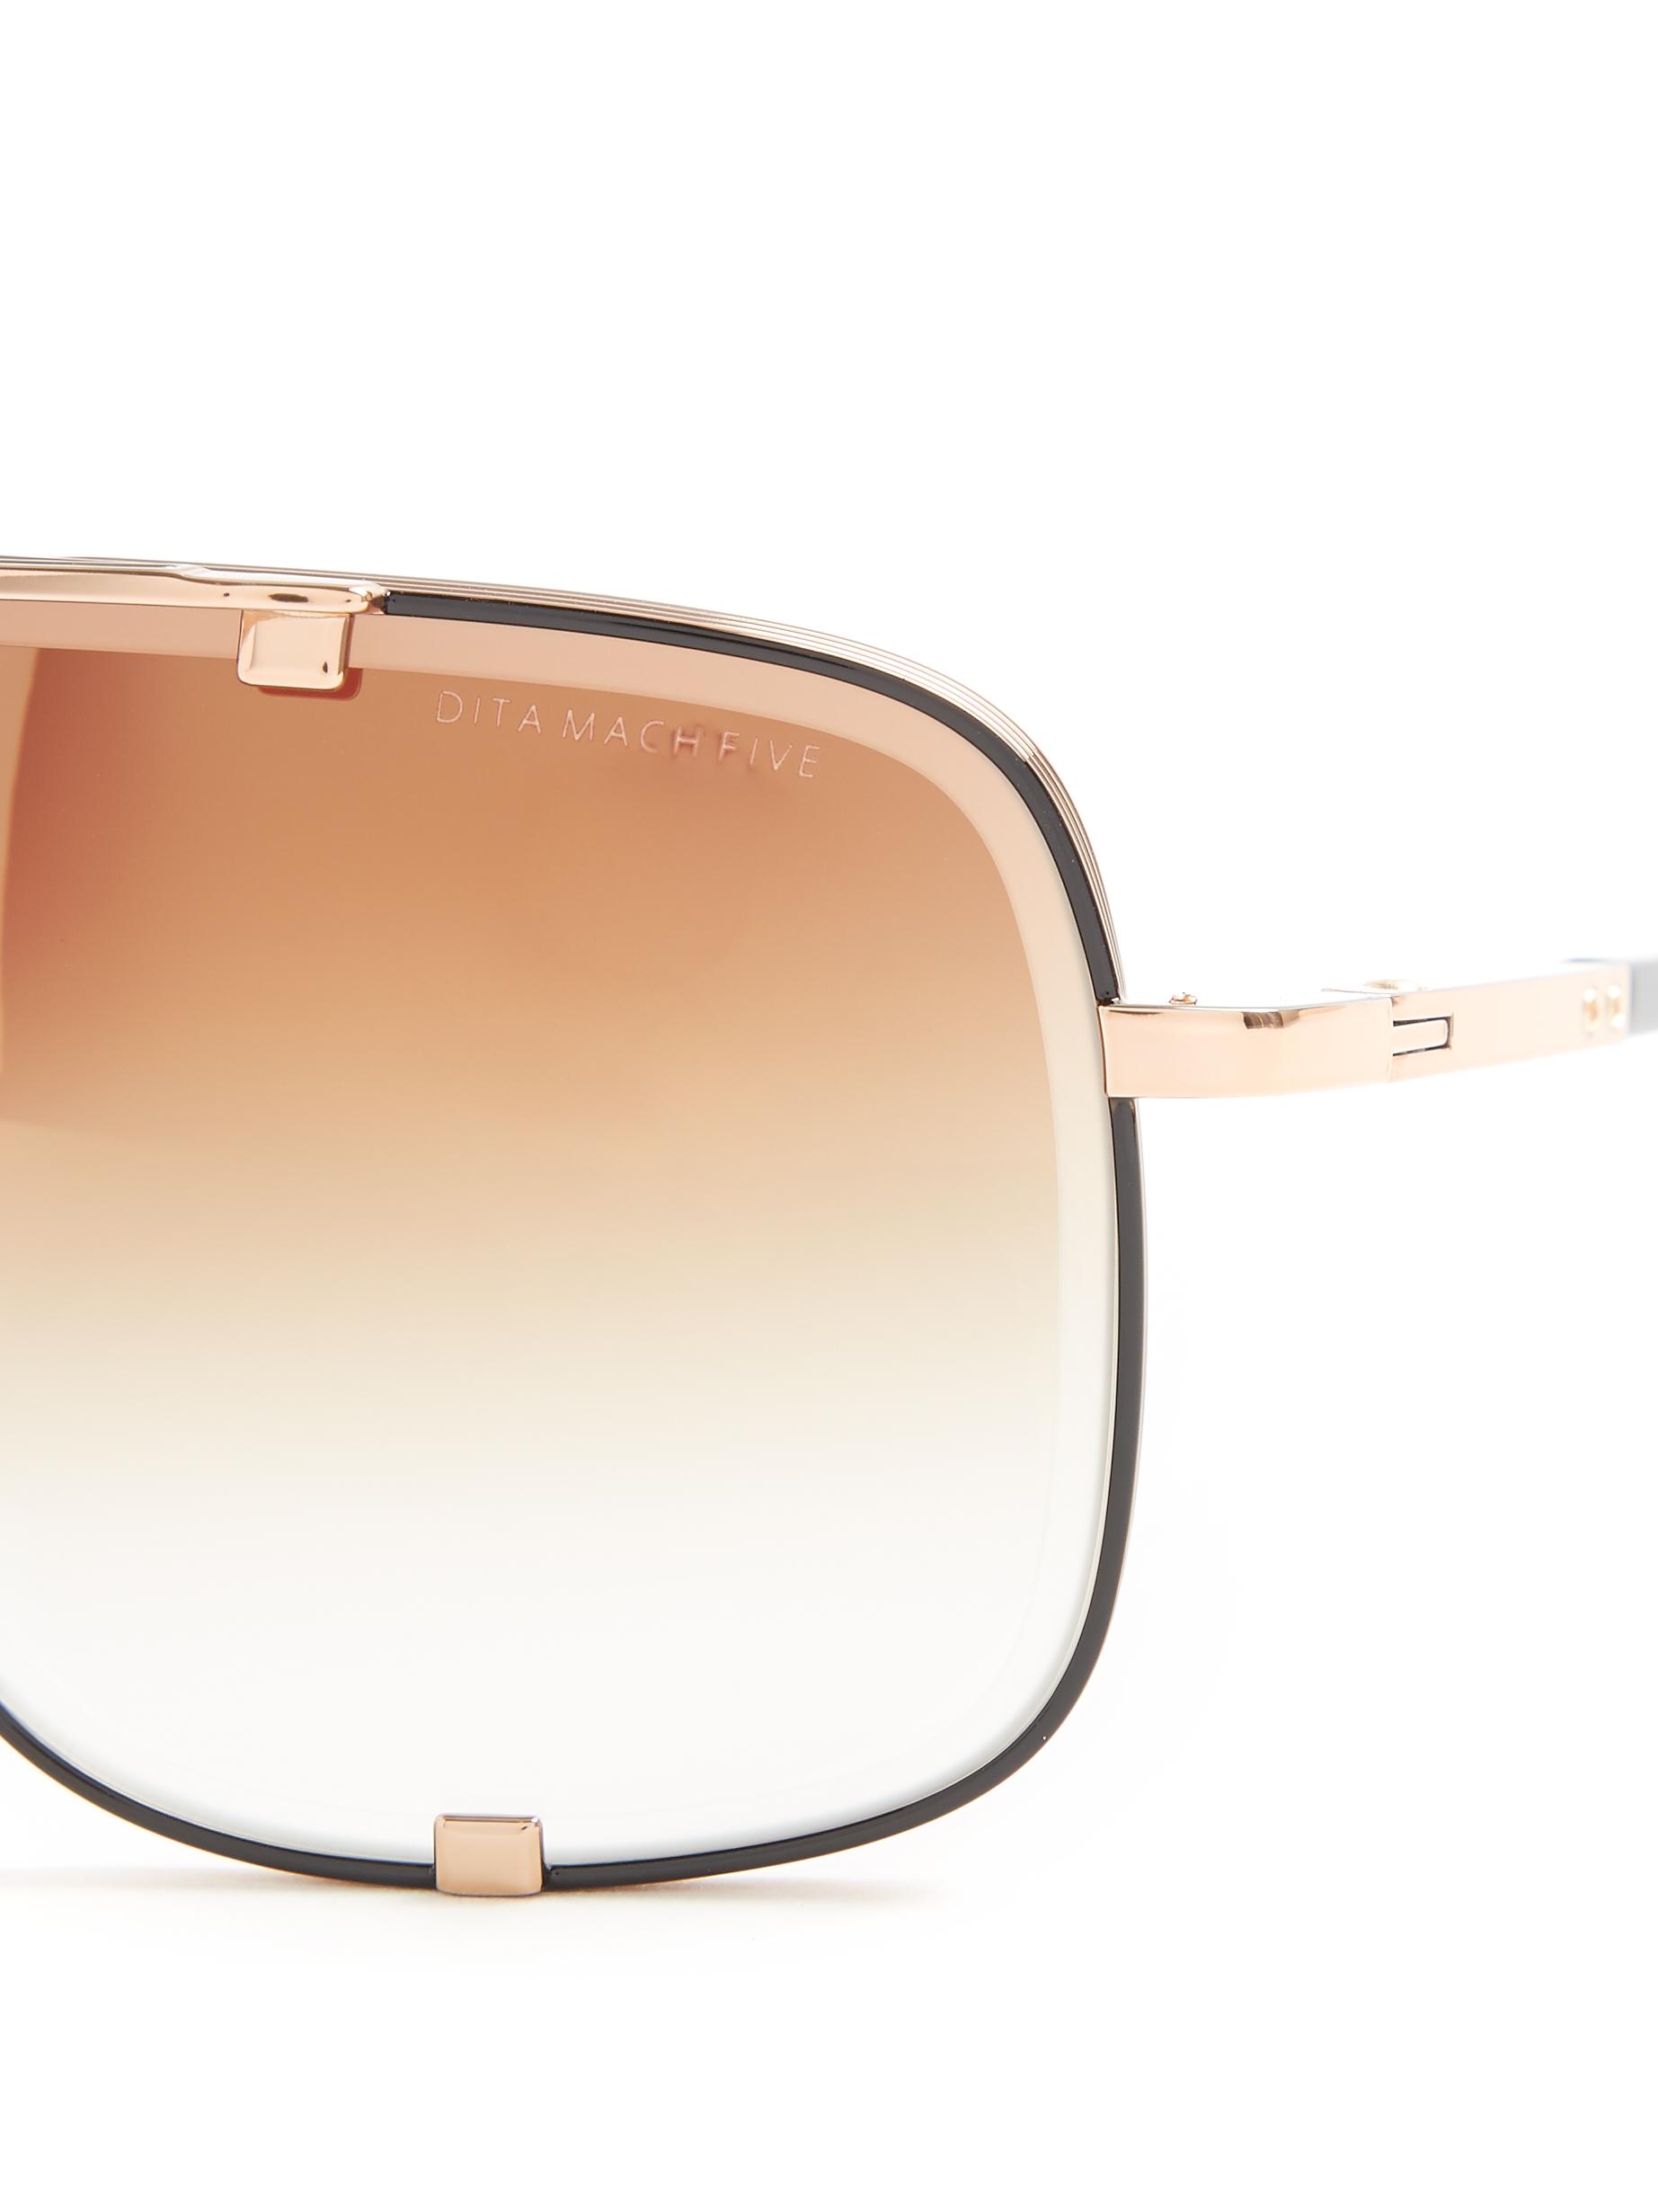 Dita Eyewear Mach-five Sunglasses for Men | Lyst